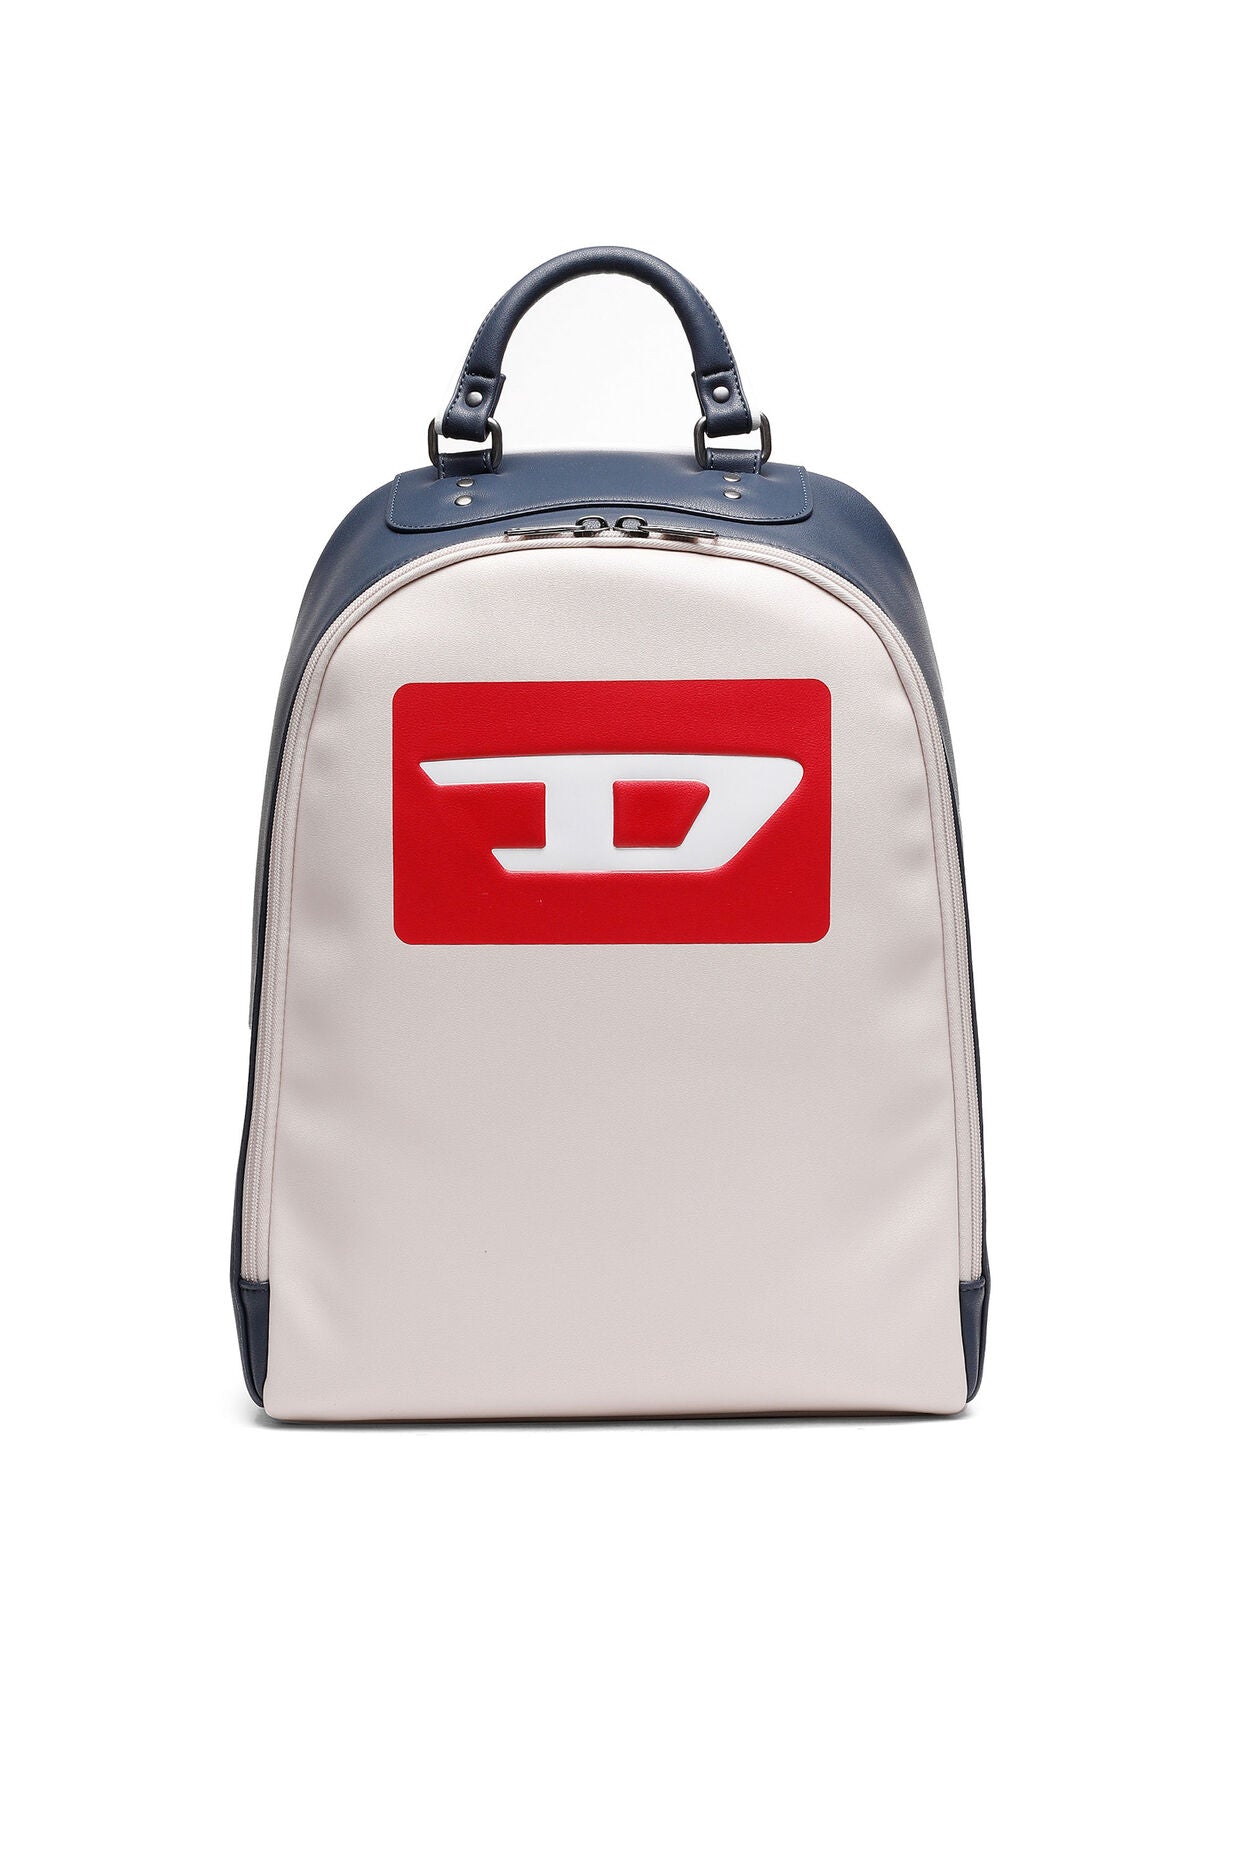 Diesel Unisex Backpack Hein DB White/Blue